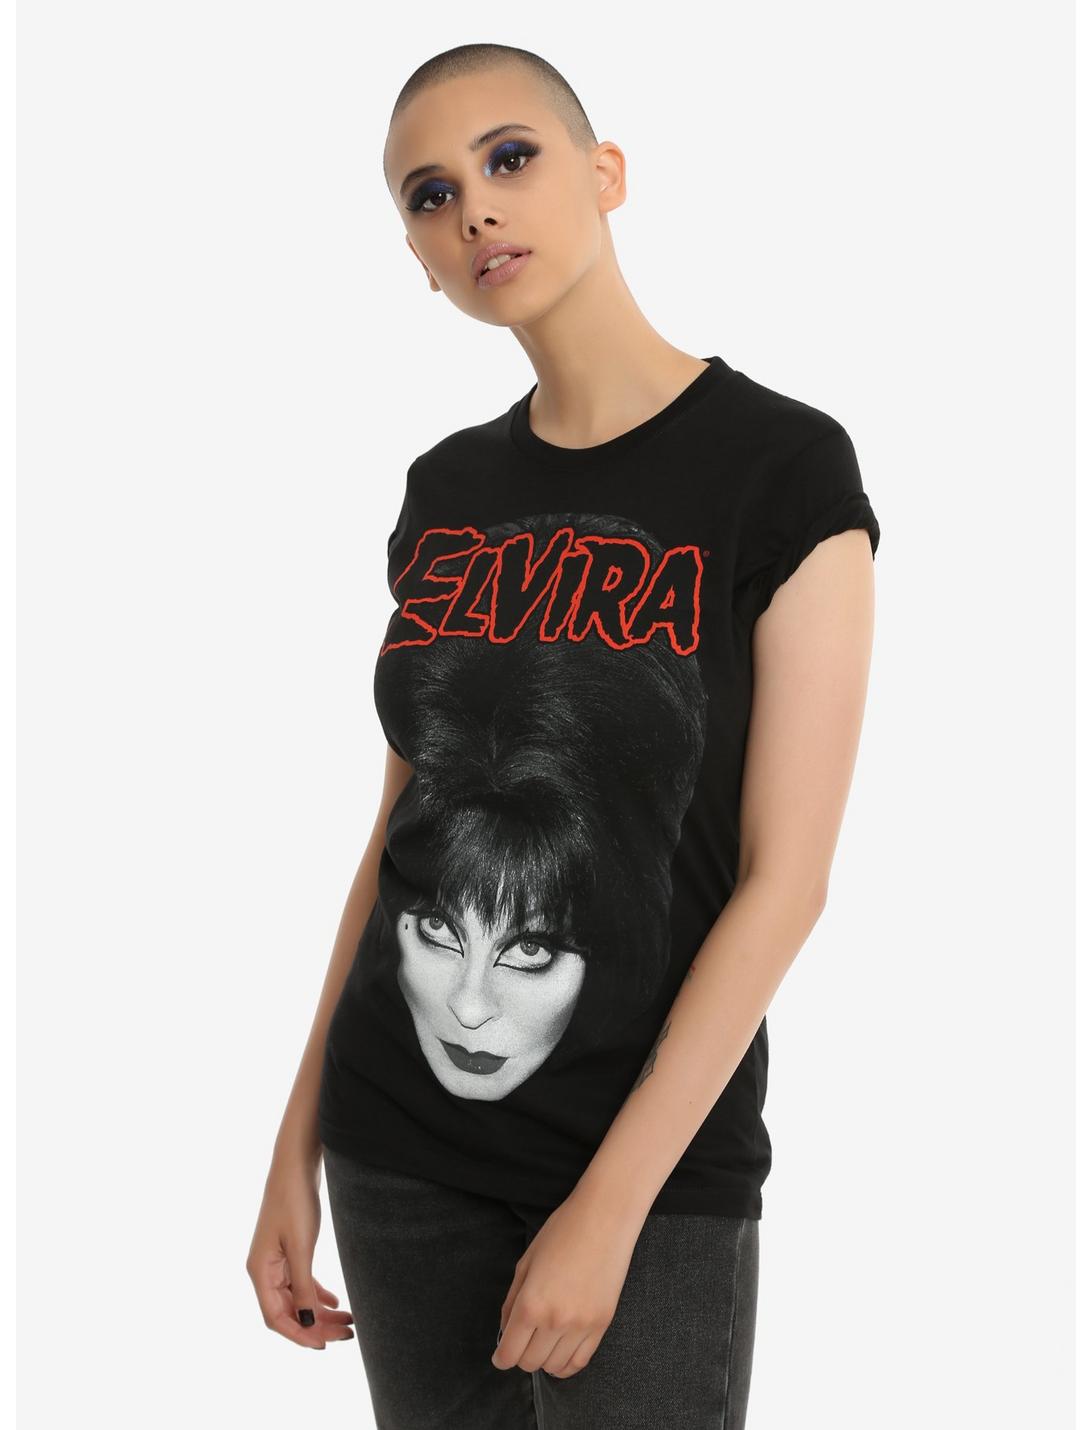 Elvira Mistress Of The Dark Photo Girls T-Shirt, BLACK, hi-res